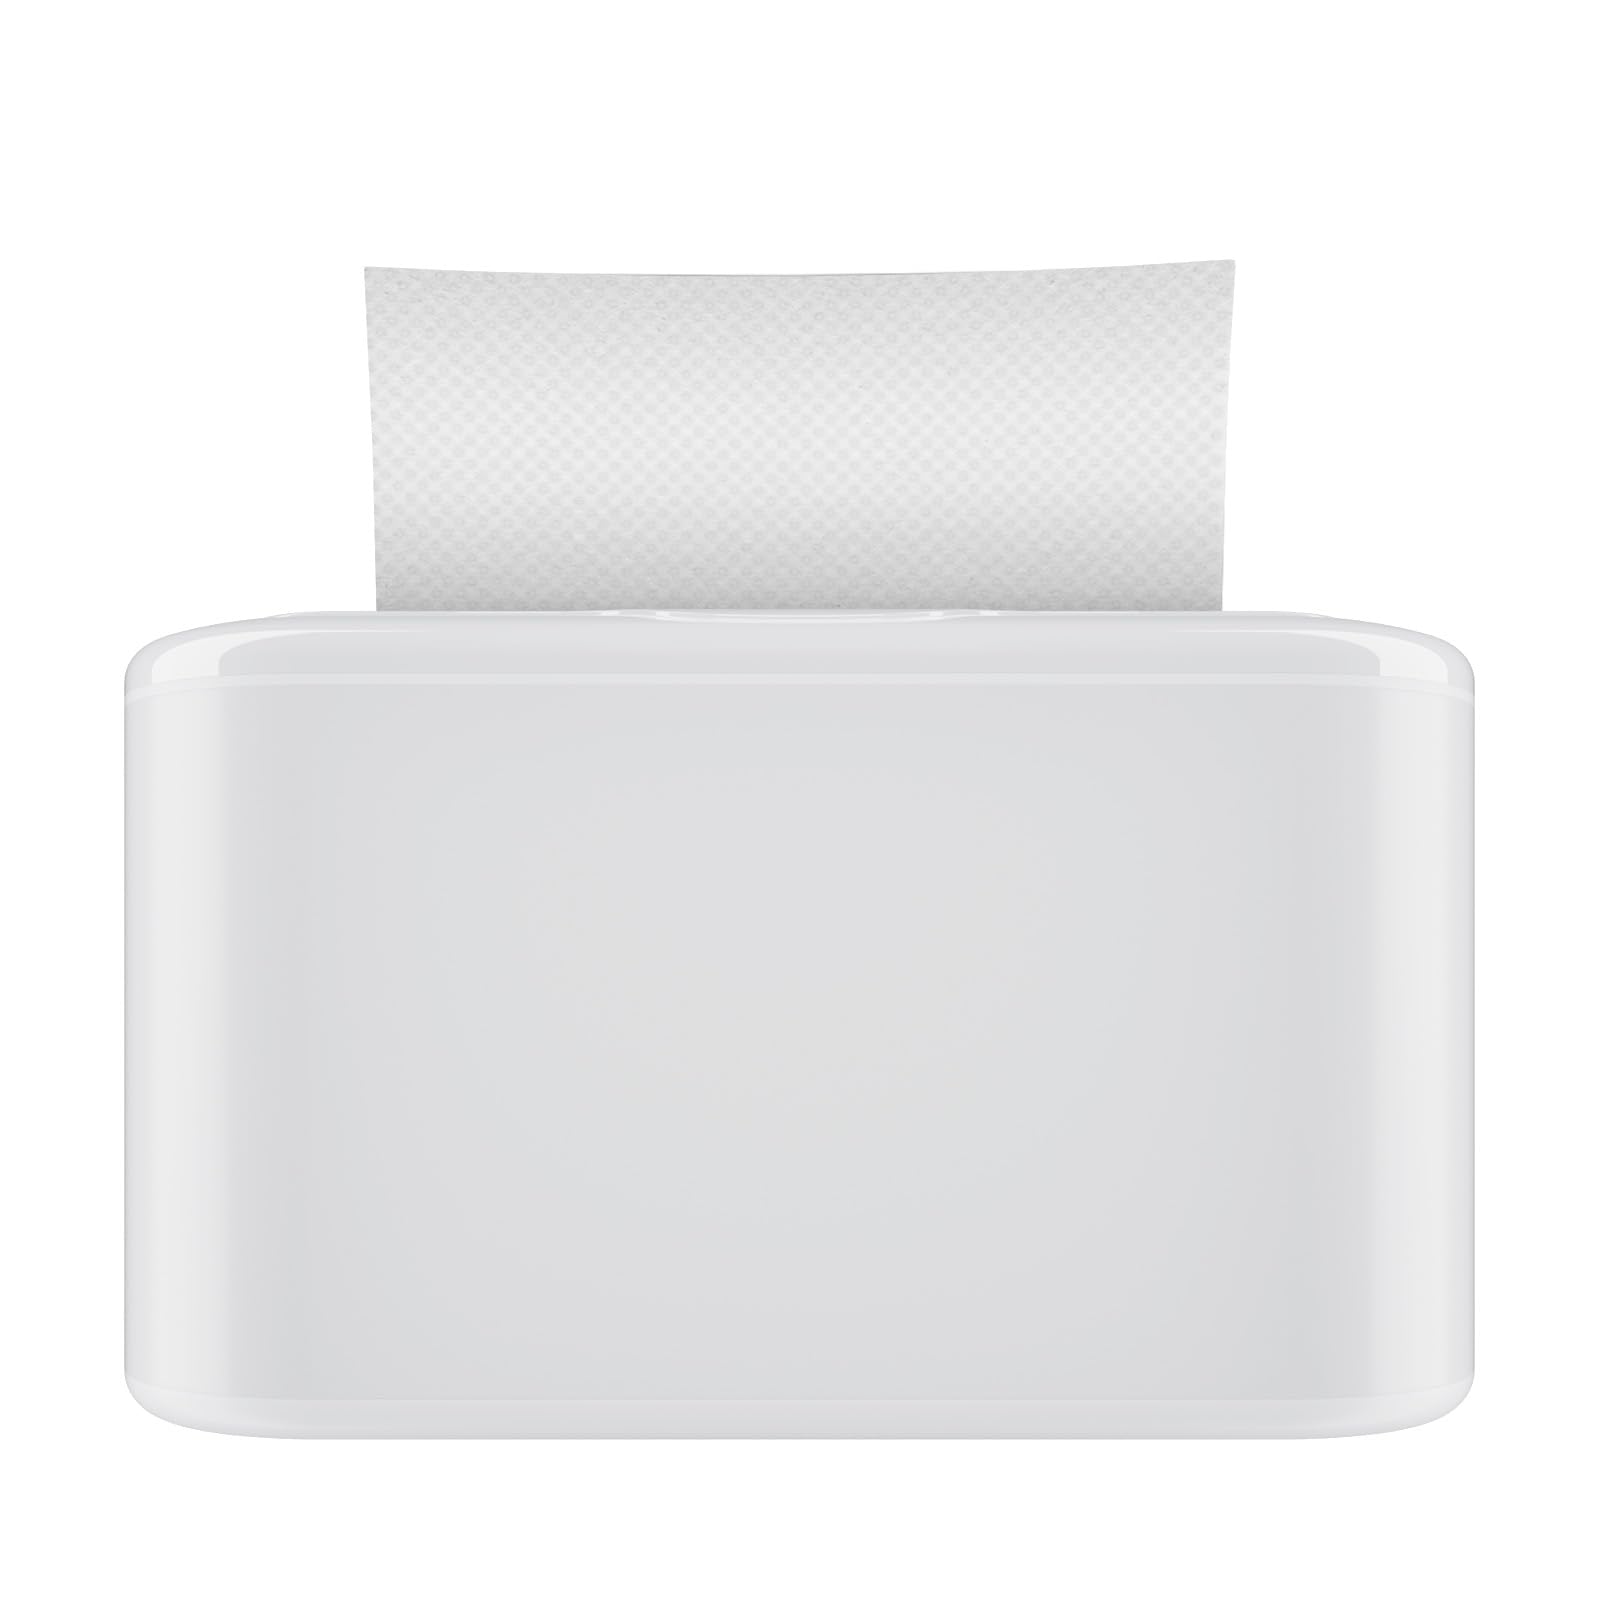 Xlxker Paper Towel Dispenser Countertop, Multifold Hand Towel Dispenser for Bedroom, Bathroom, Kitchen, Toilet (White)